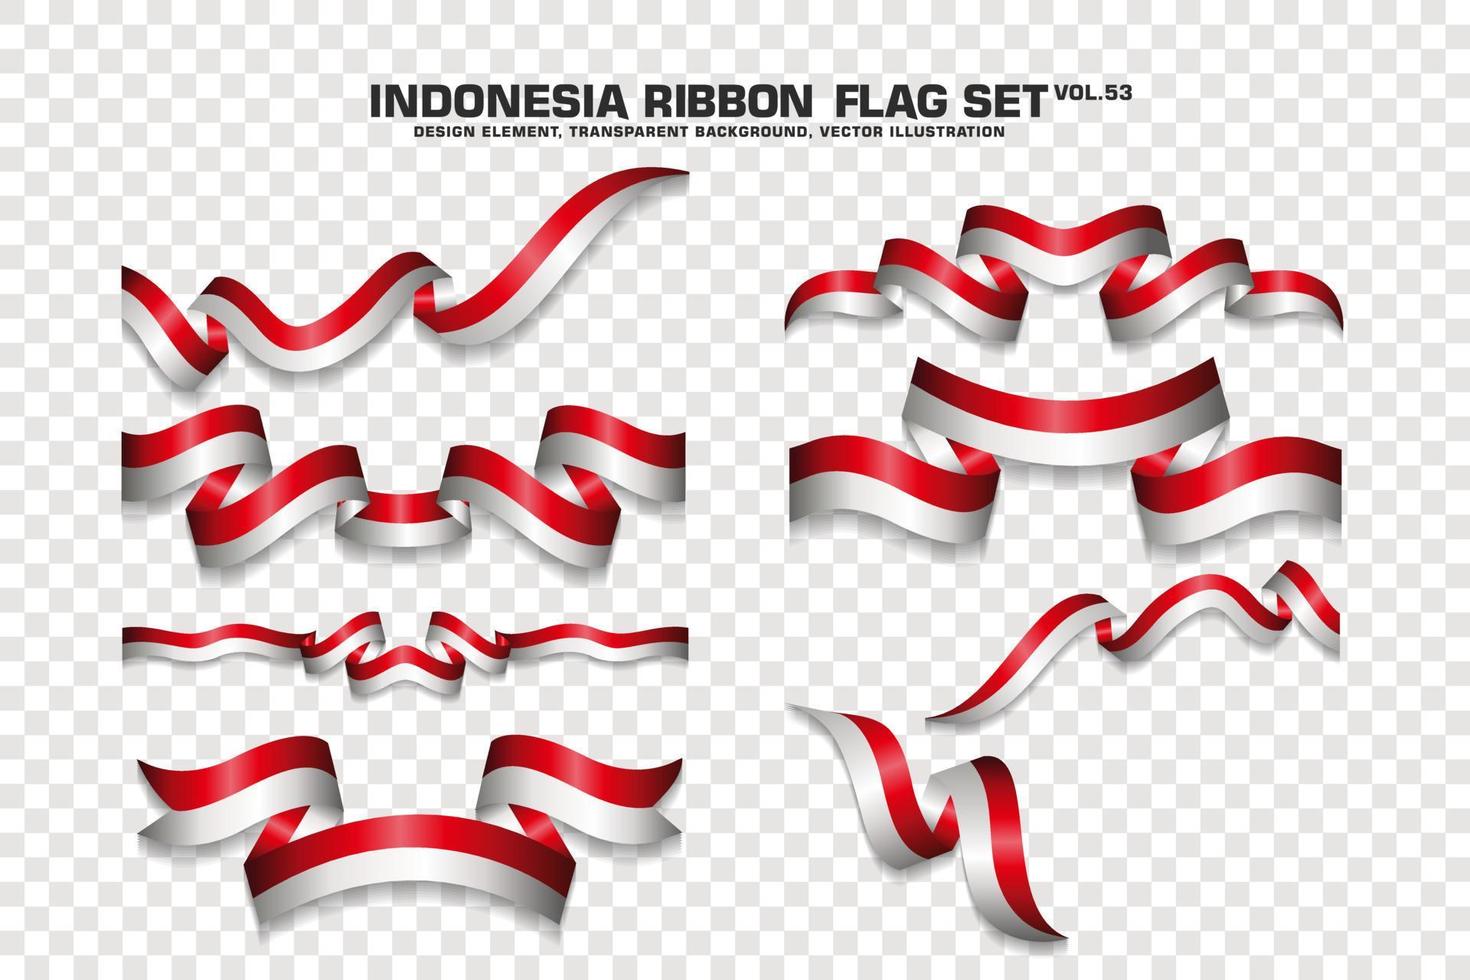 Indonesië lint vlaggen set, element ontwerp, 3D-stijl. vector illustratie